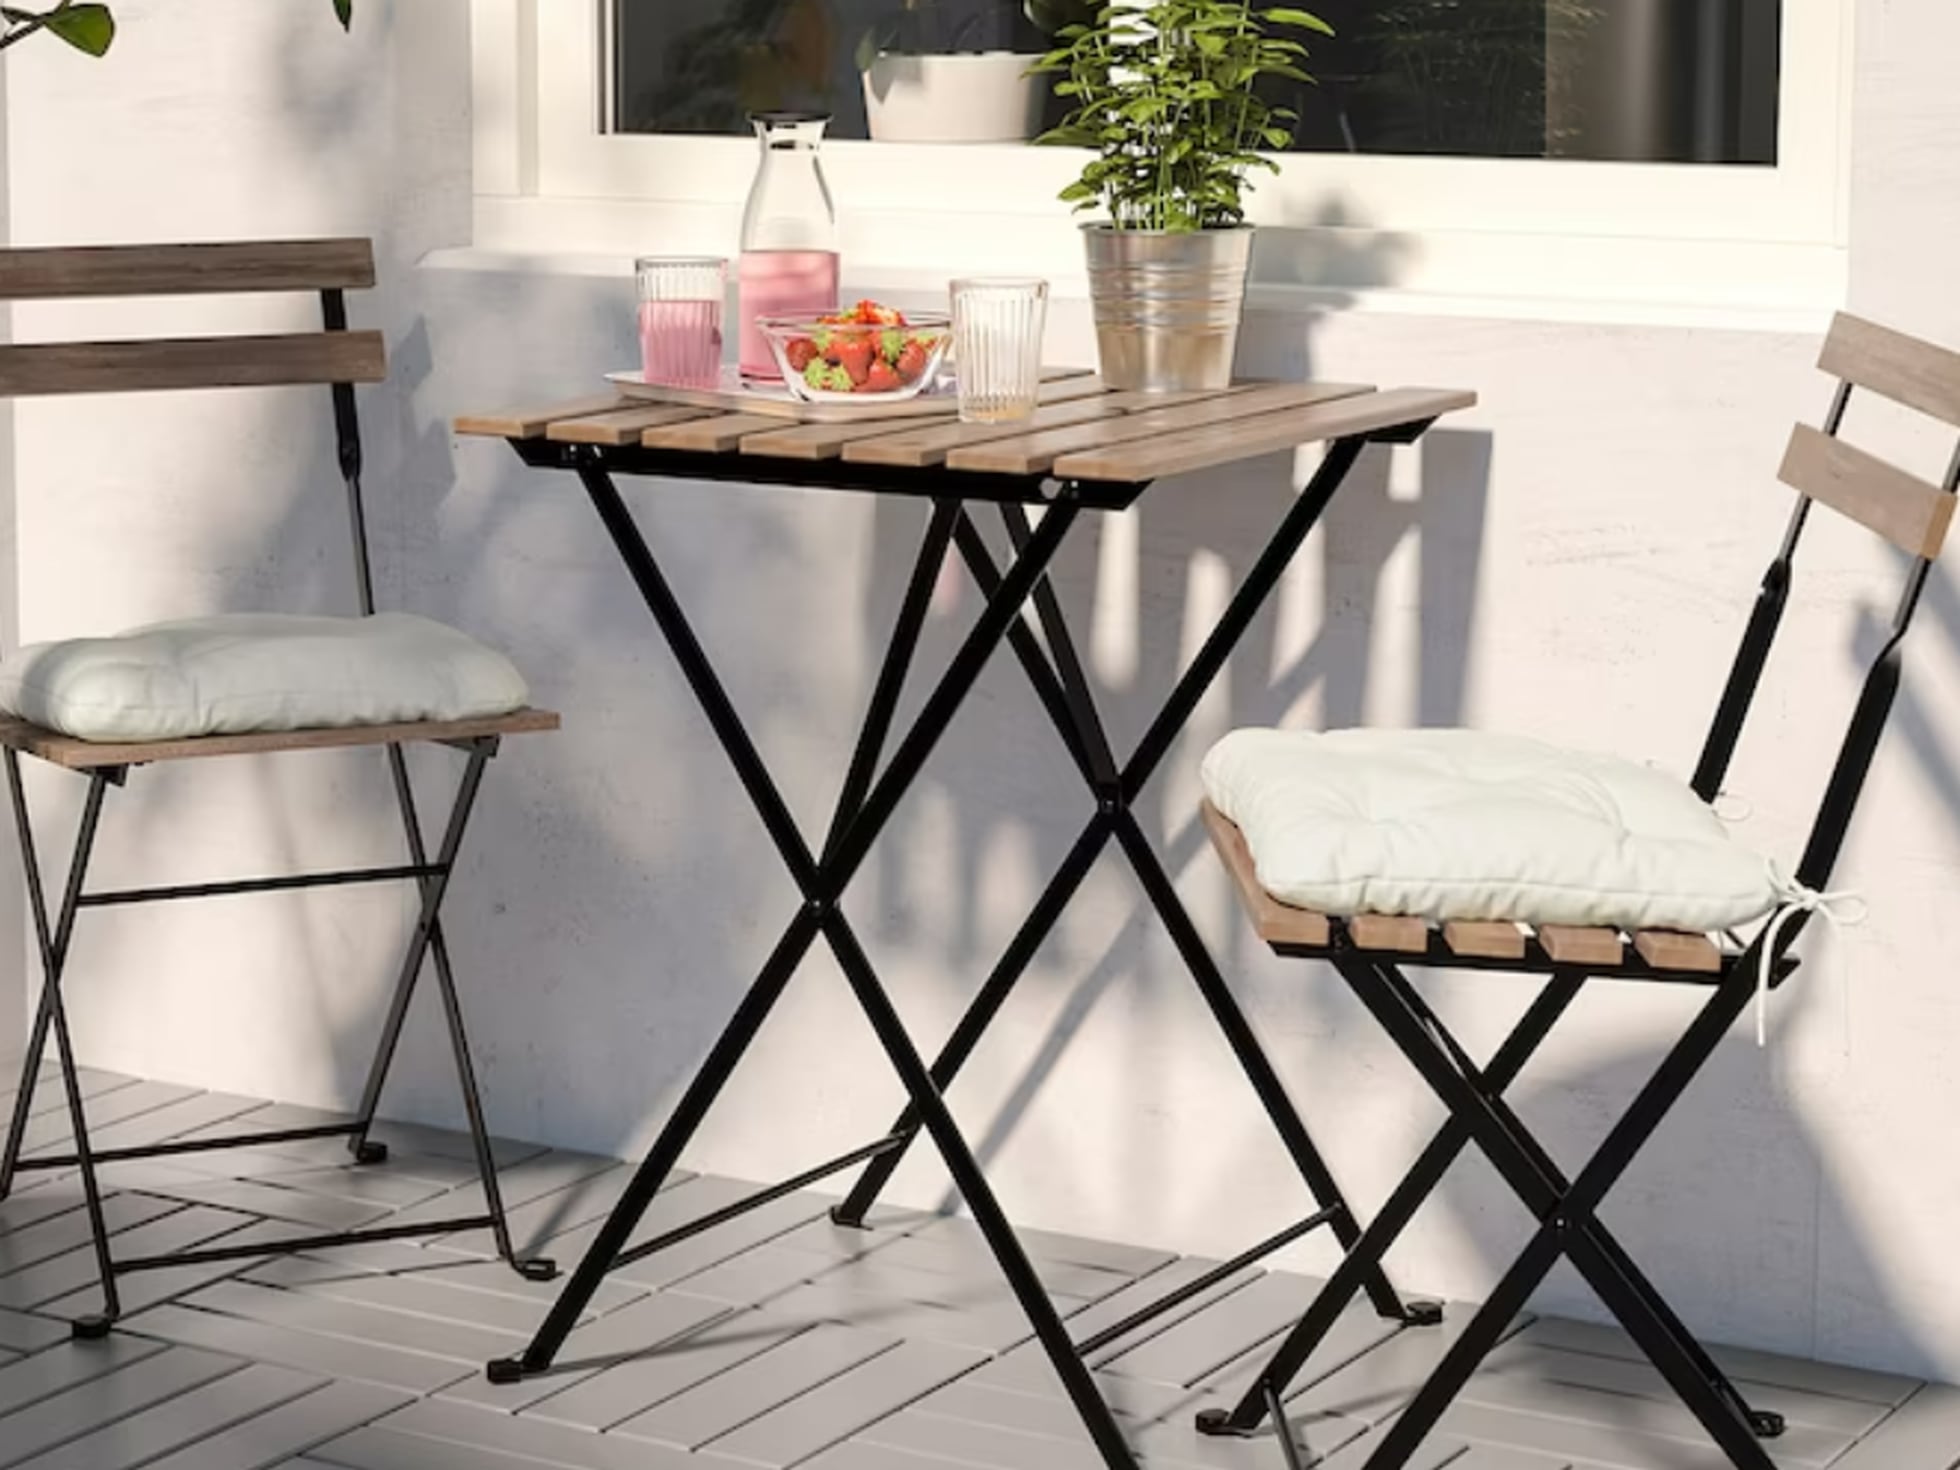 La mesa plegable baratísima de IKEA perfecta para un comedor pequeño